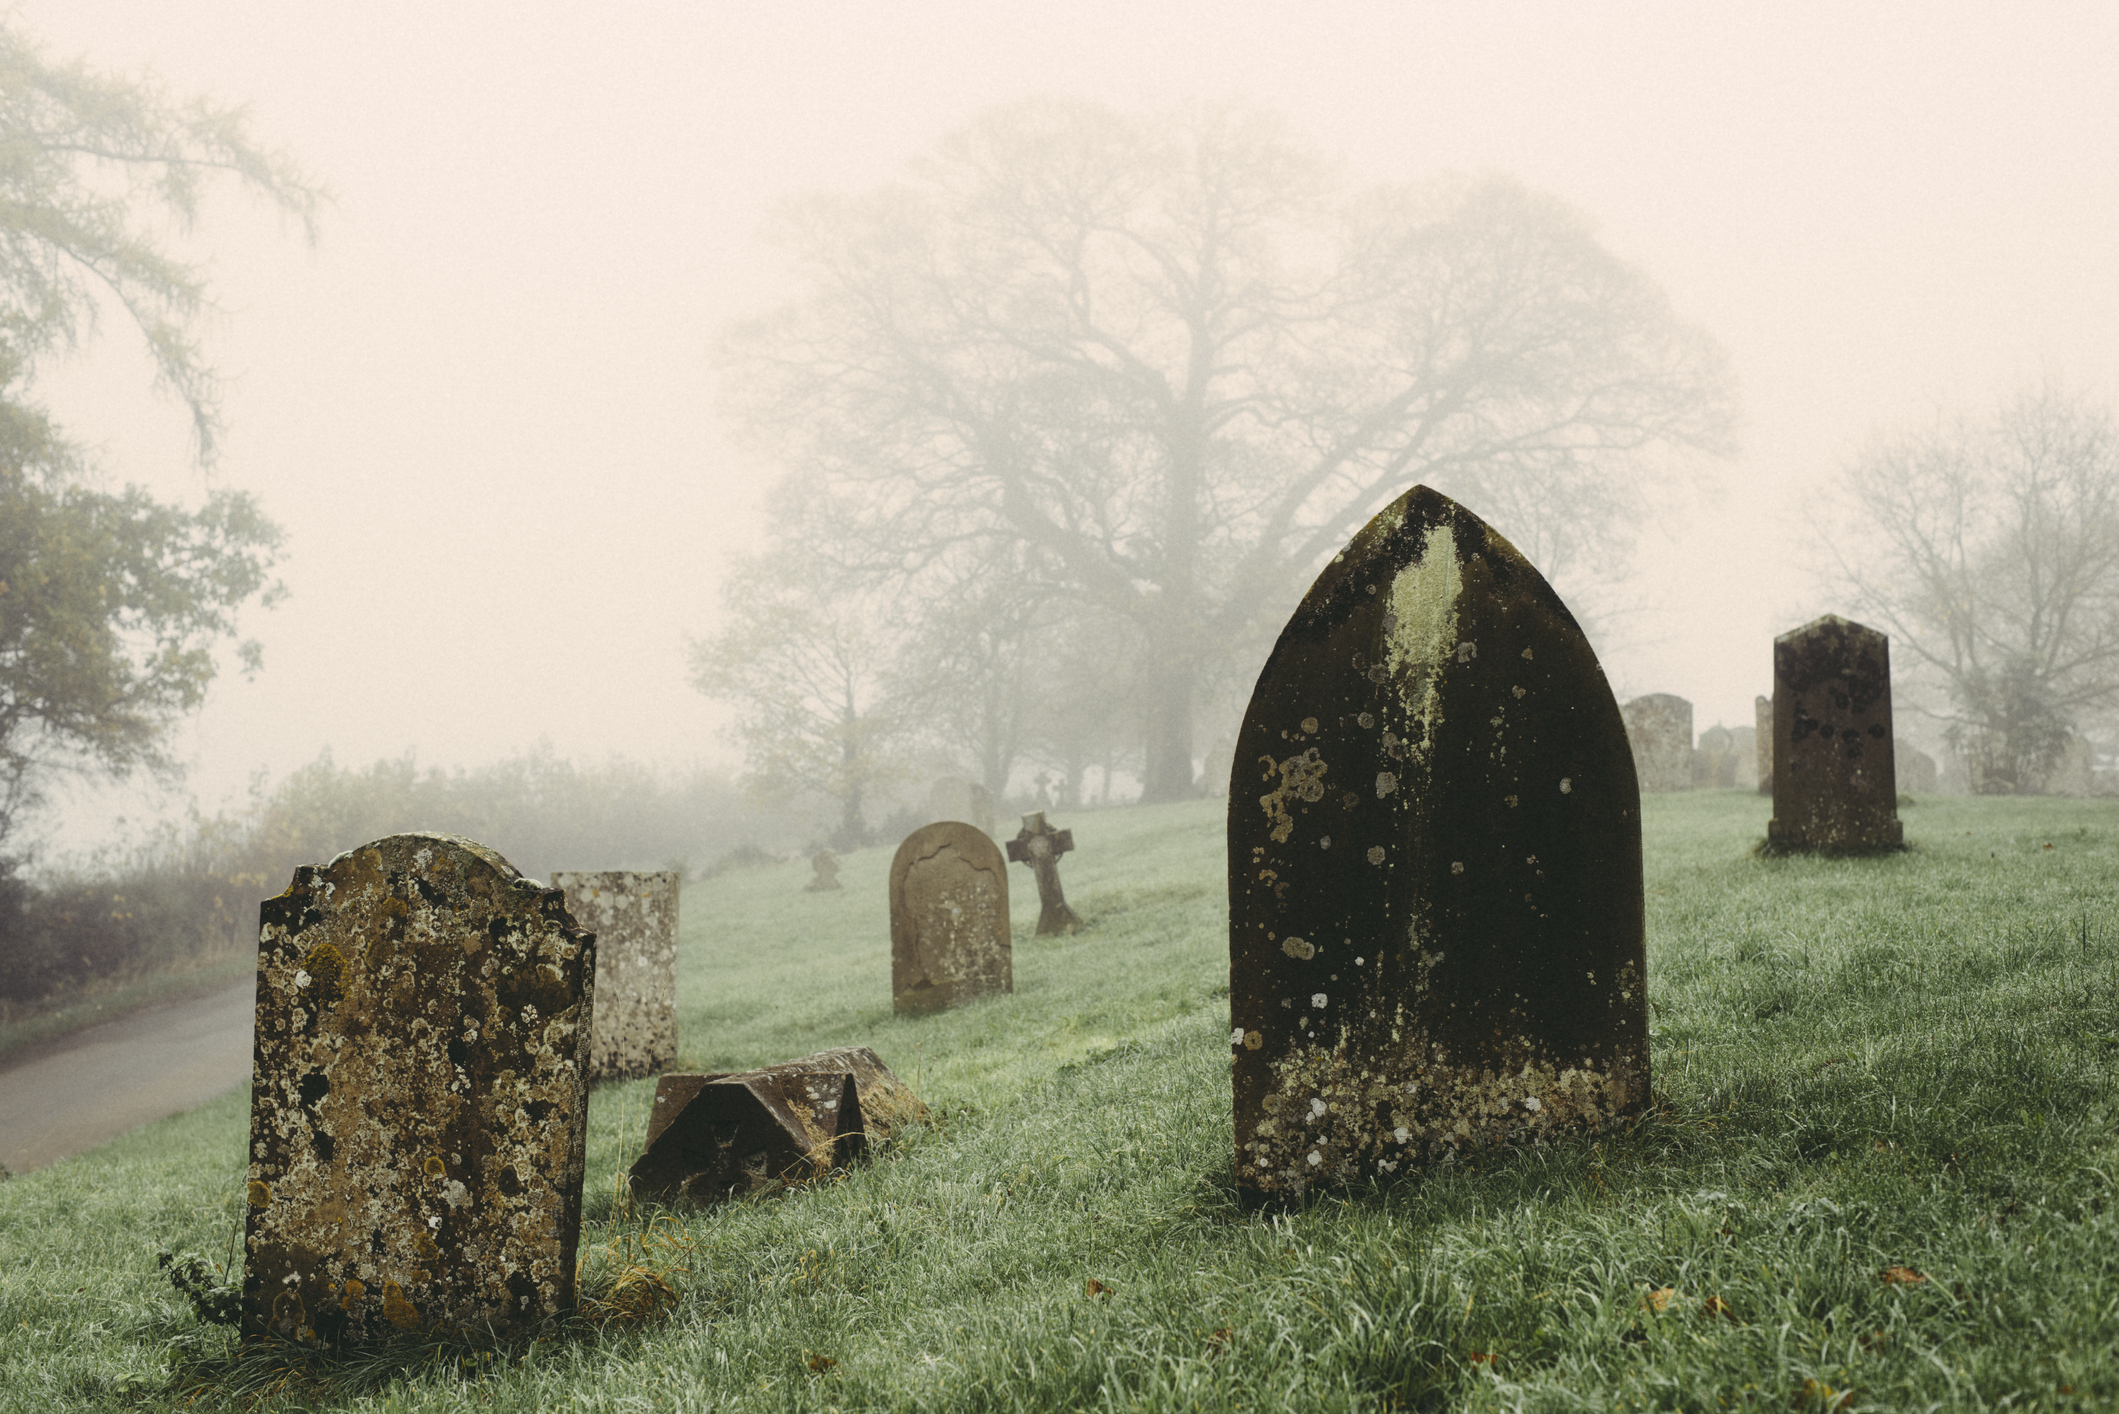 Virtuelle Friedhöfe: Wie man während Social Distancing online gedenken kann